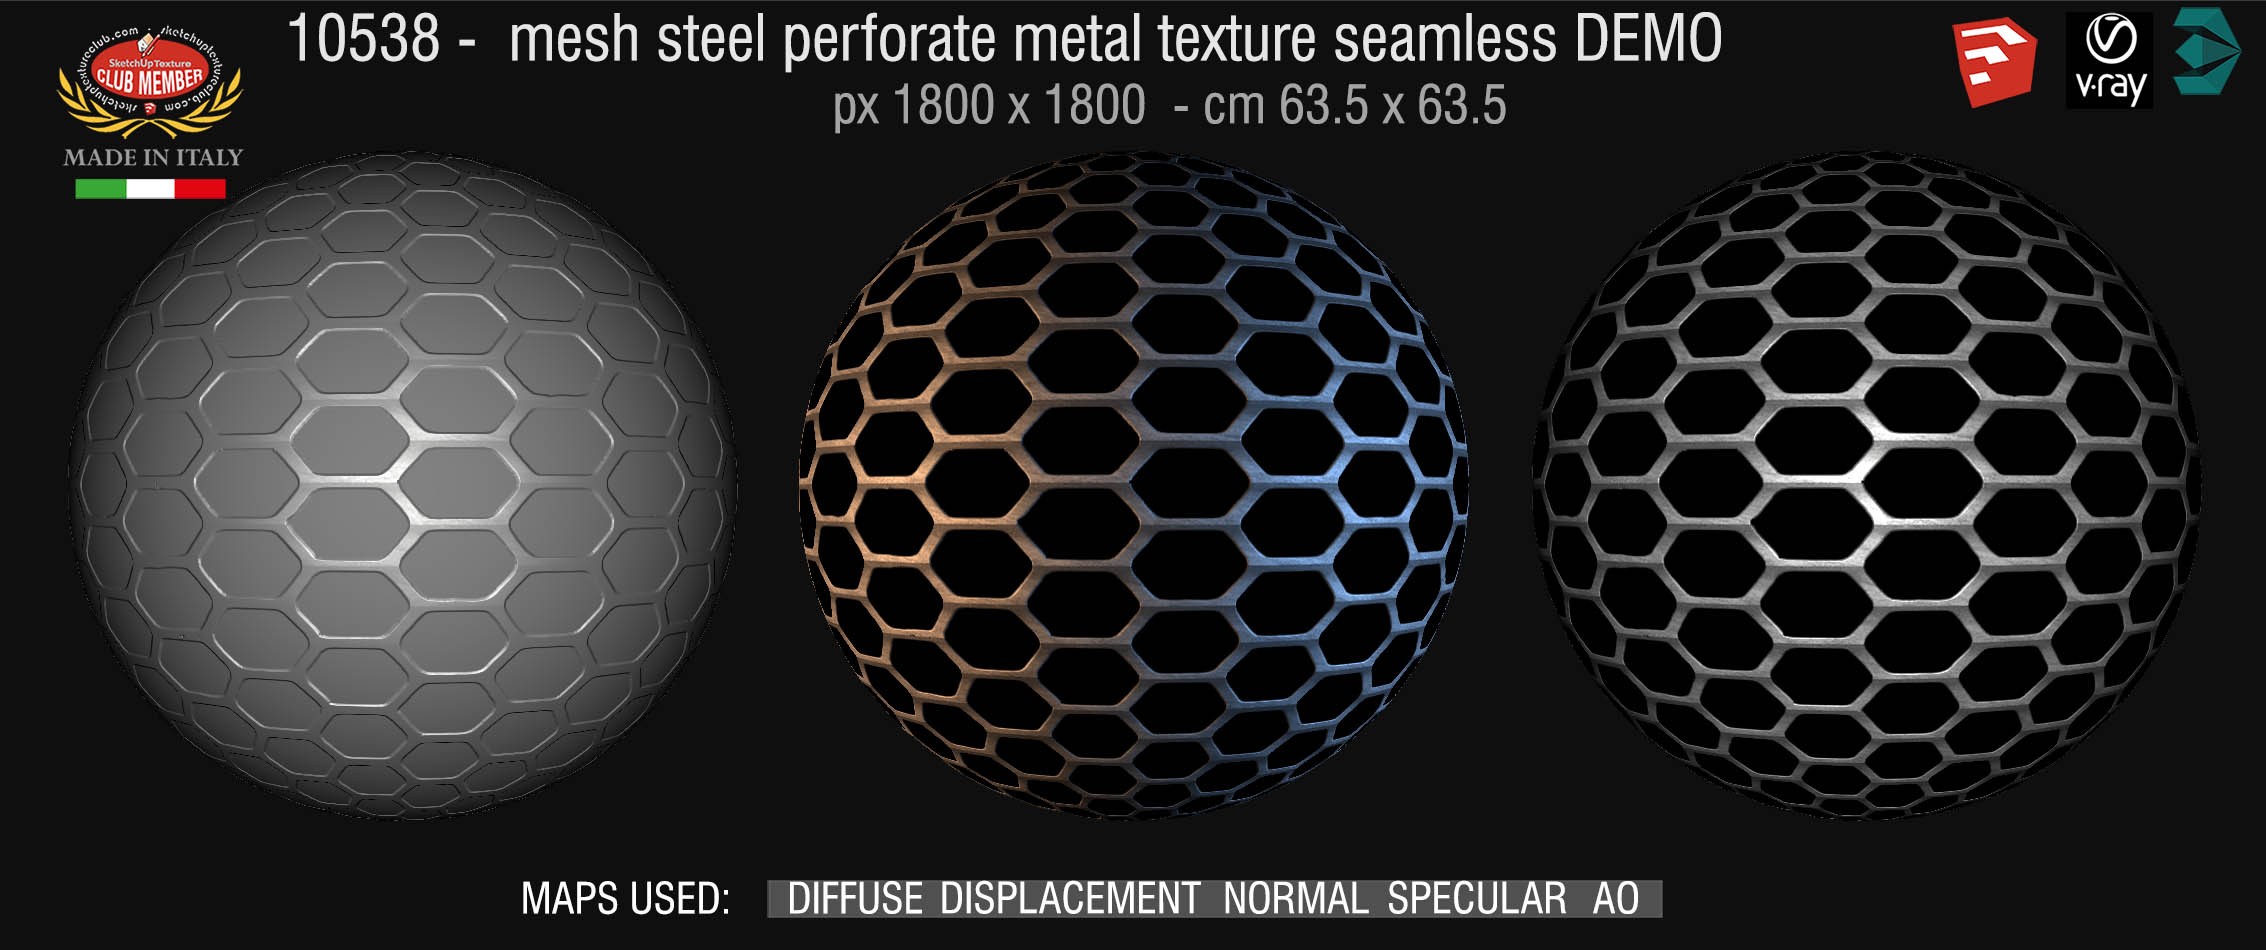 10538 HR Mesh steel perforate metal texture seamless + maps DEMO